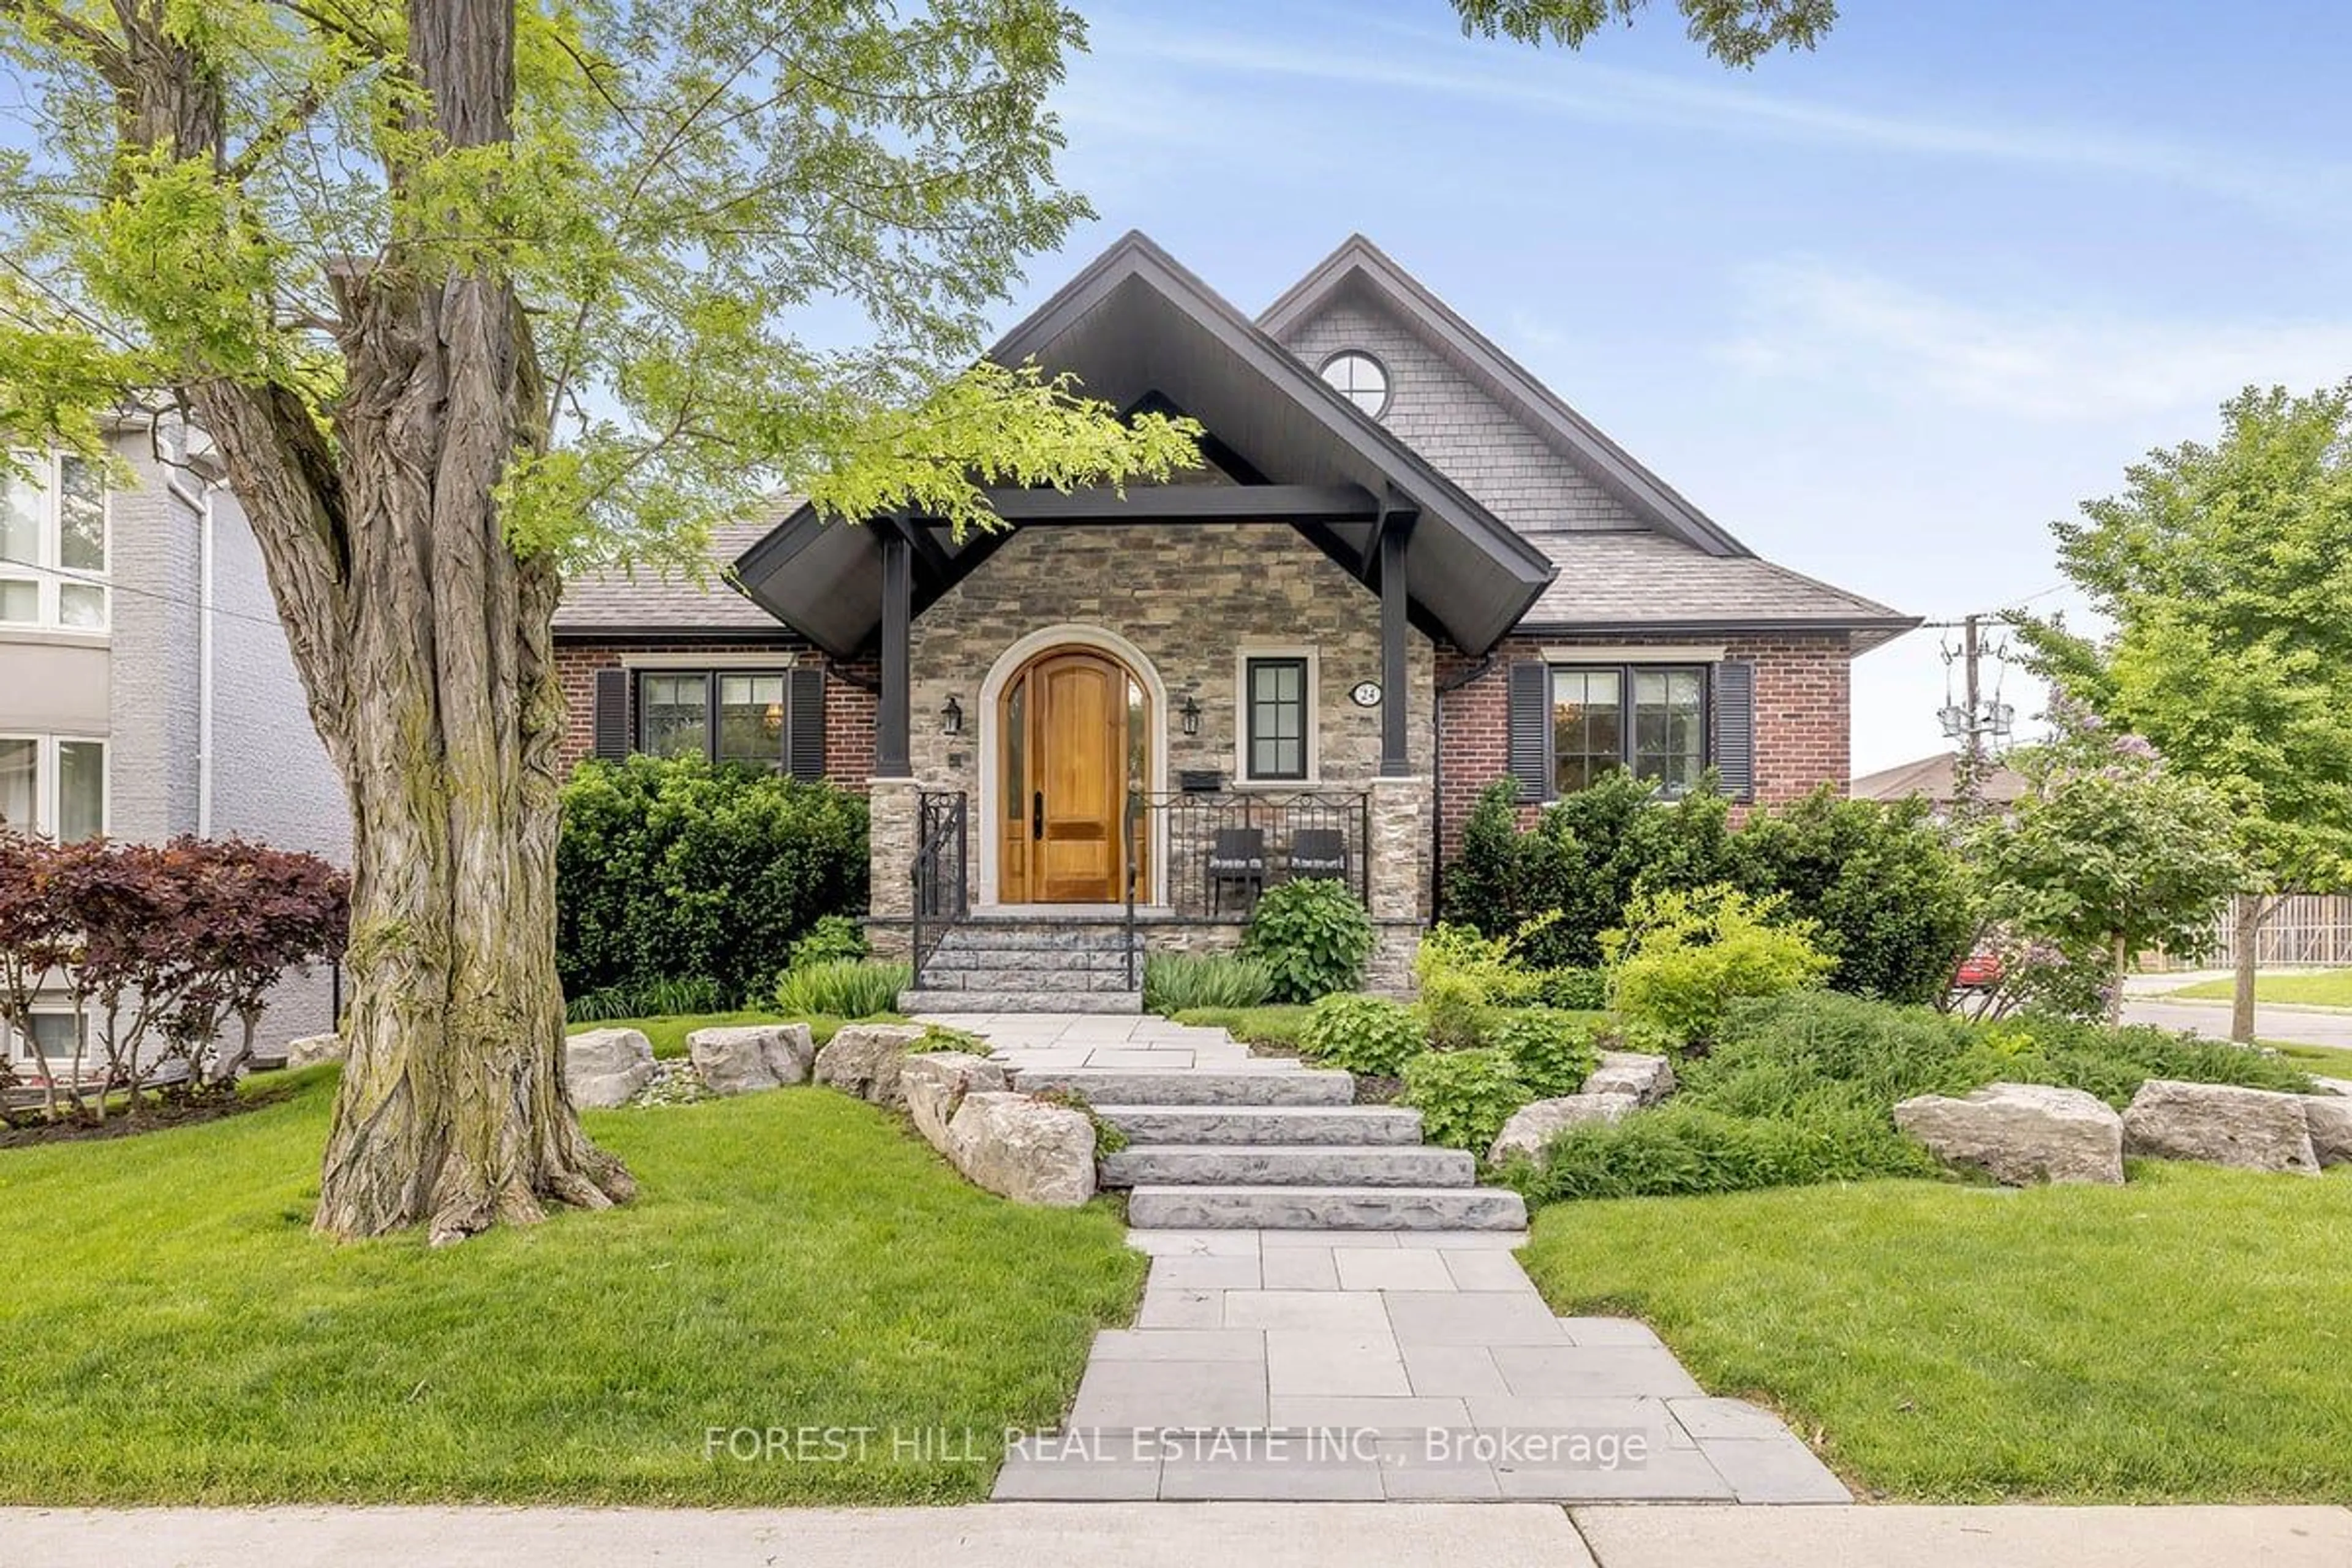 Home with brick exterior material for 24 Glen Park Ave, Toronto Ontario M6B 2C2